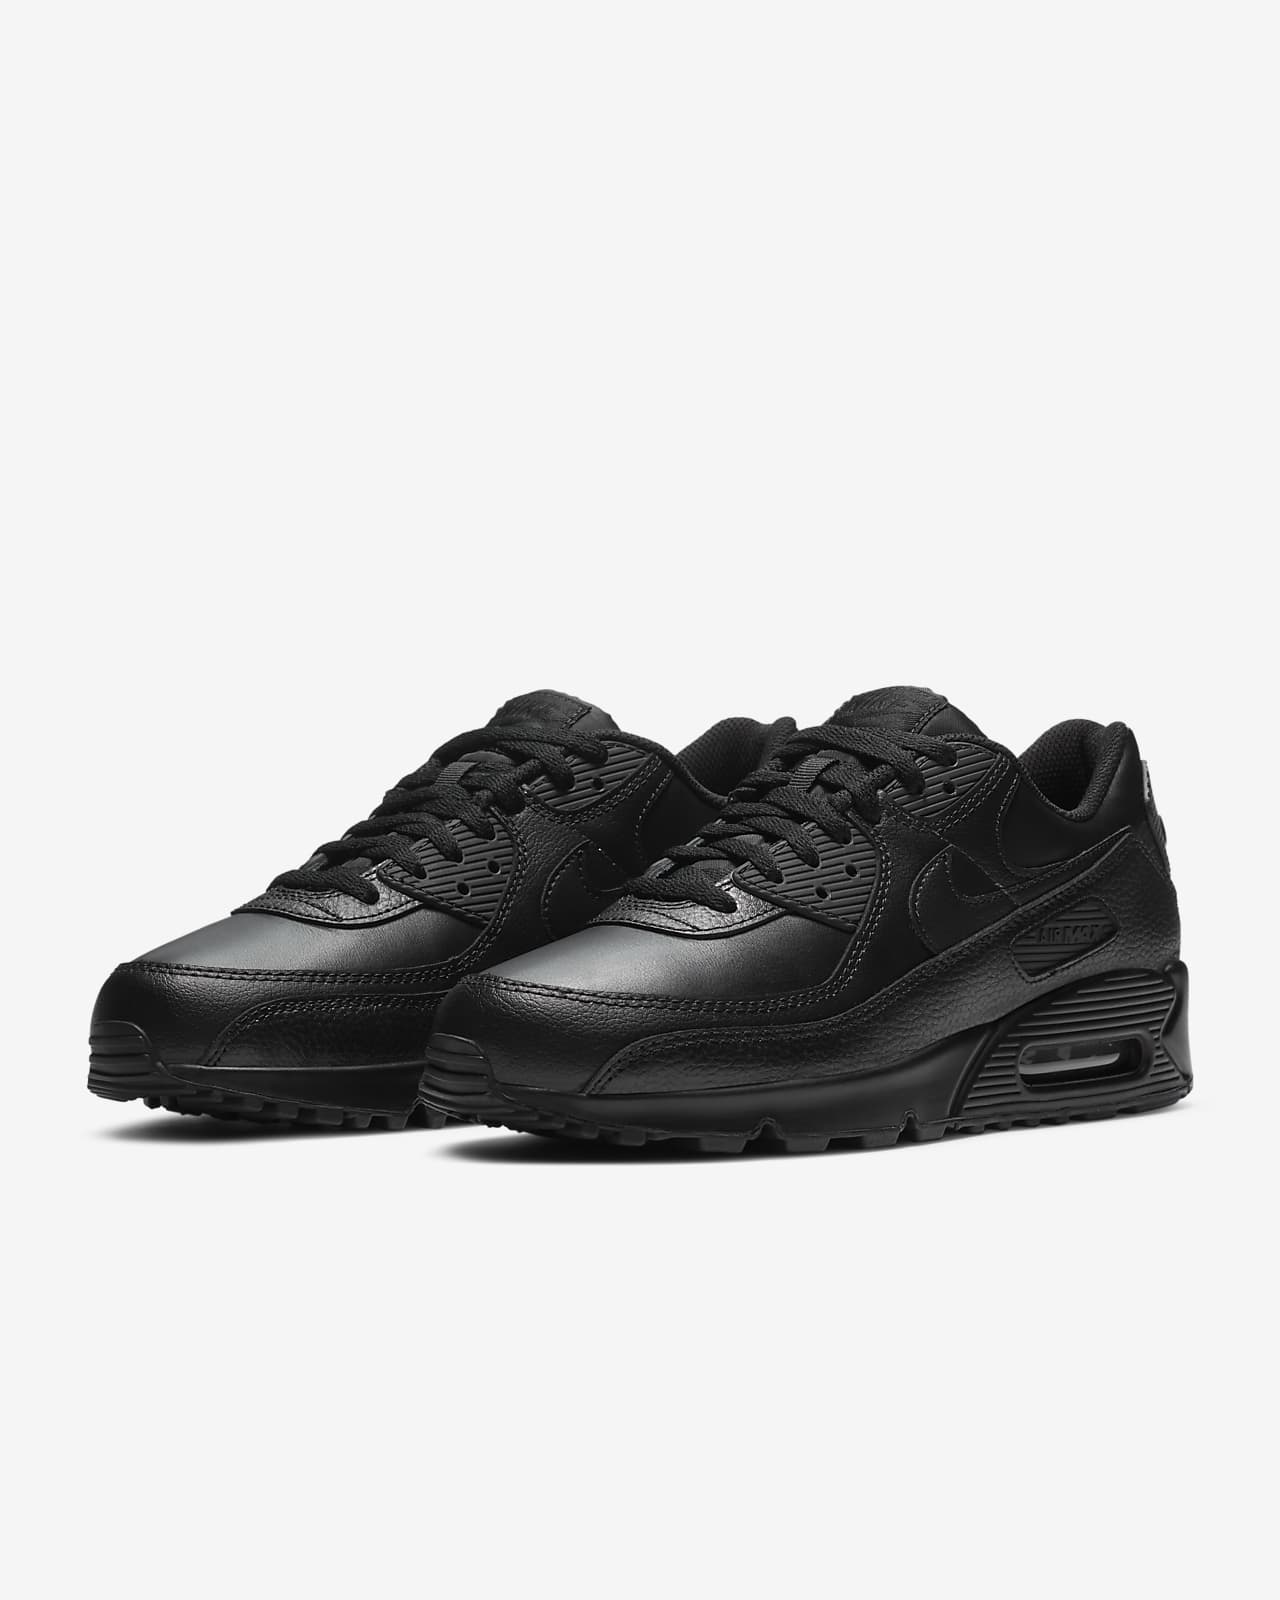 Air Max 90 LTR Men's Shoes. Nike CA